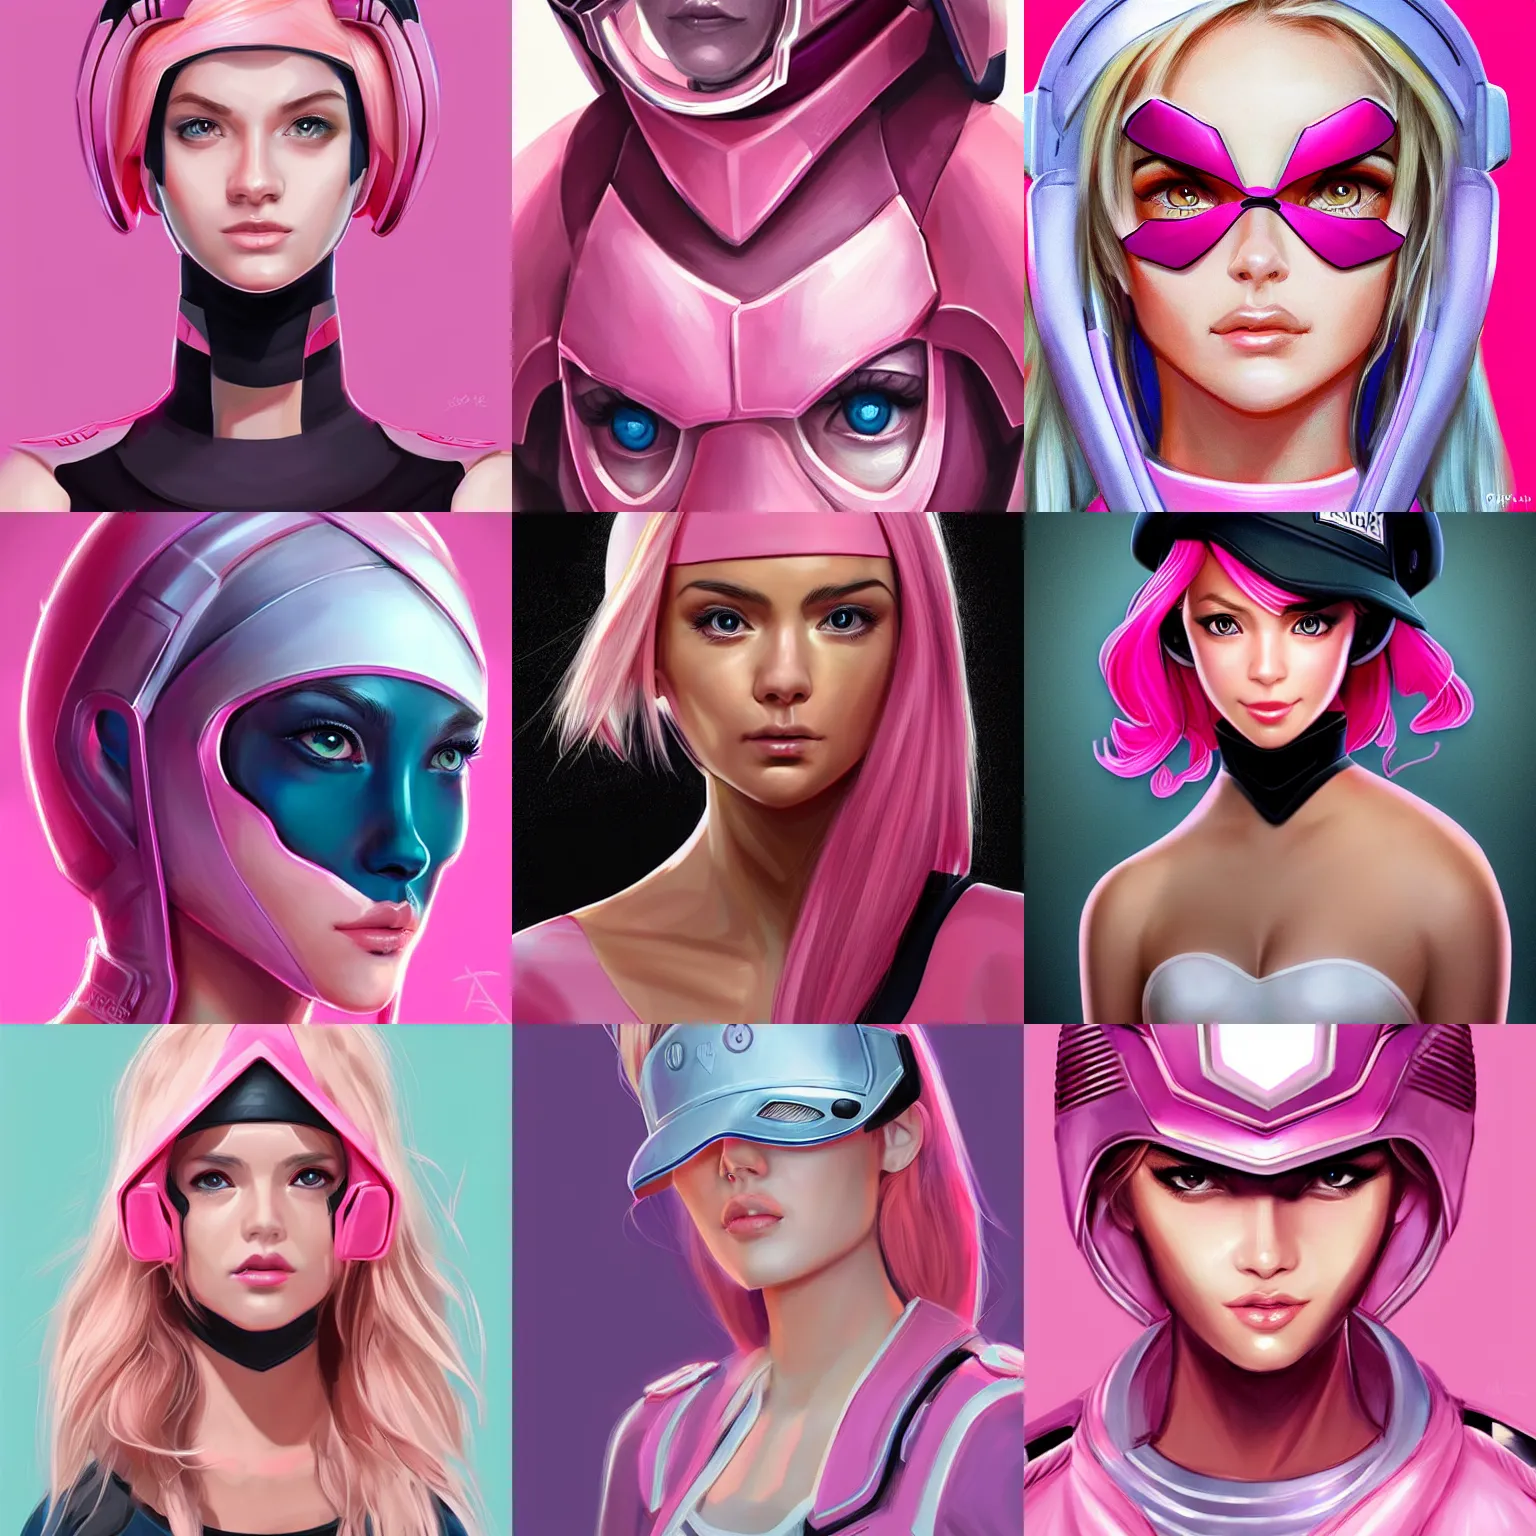 Prompt: symetrical character concept portrait, pink visor elle woods heroine, digital painting, concept art, smooth, sharp focus, illustration, artgerm